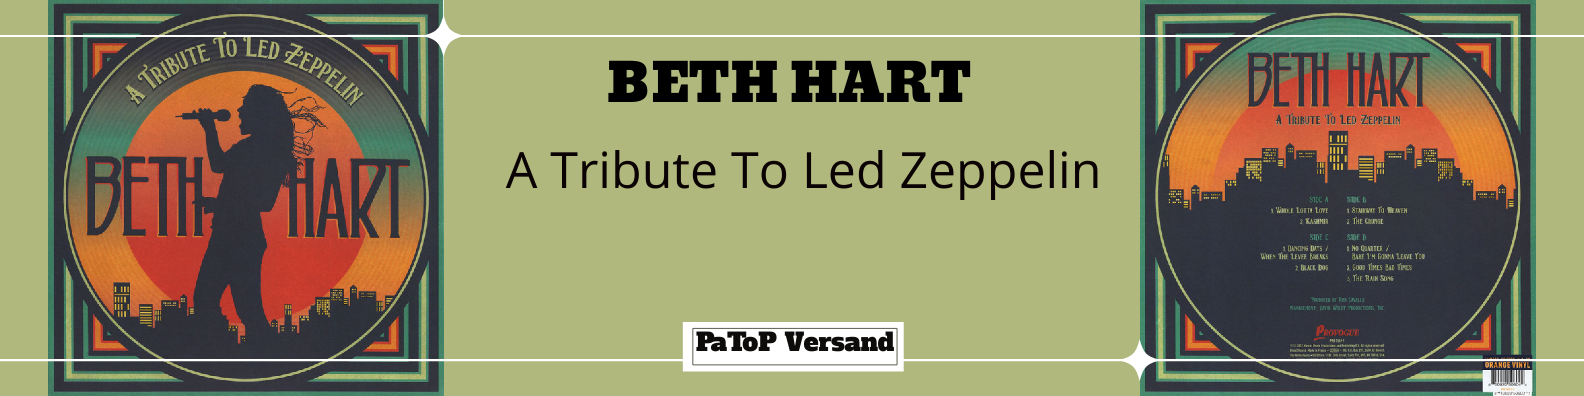 Wunder der Musik: Beth Hart zollt Led Zeppelin Tribut!